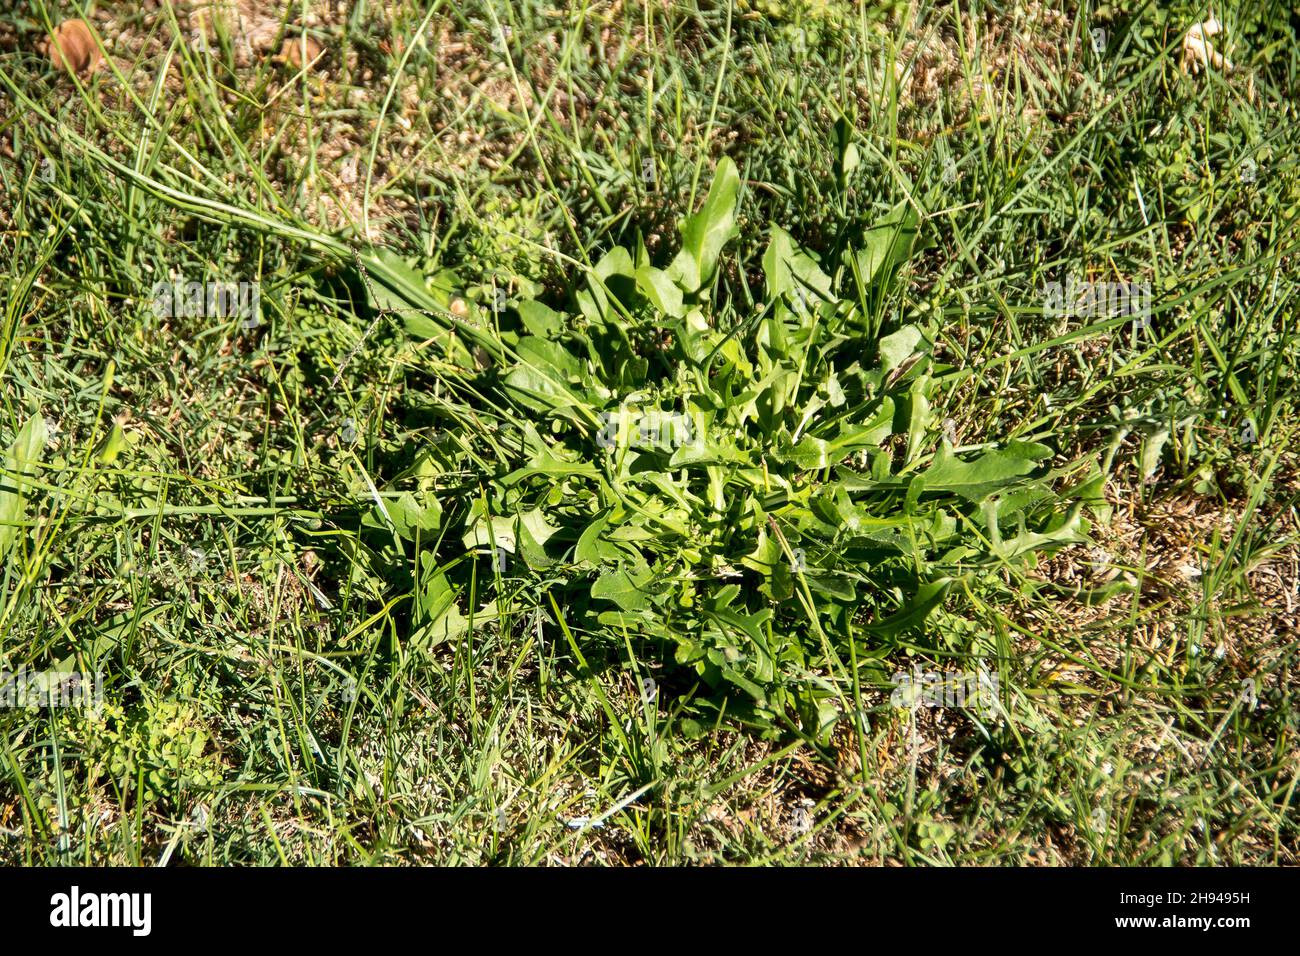 Leaves of Cat's ear weed ,Hypochaeris radicata, flatweed, in grassland in Queensland, Australia. Prolific perenniel weed similar to dandelion. Spring. Stock Photo